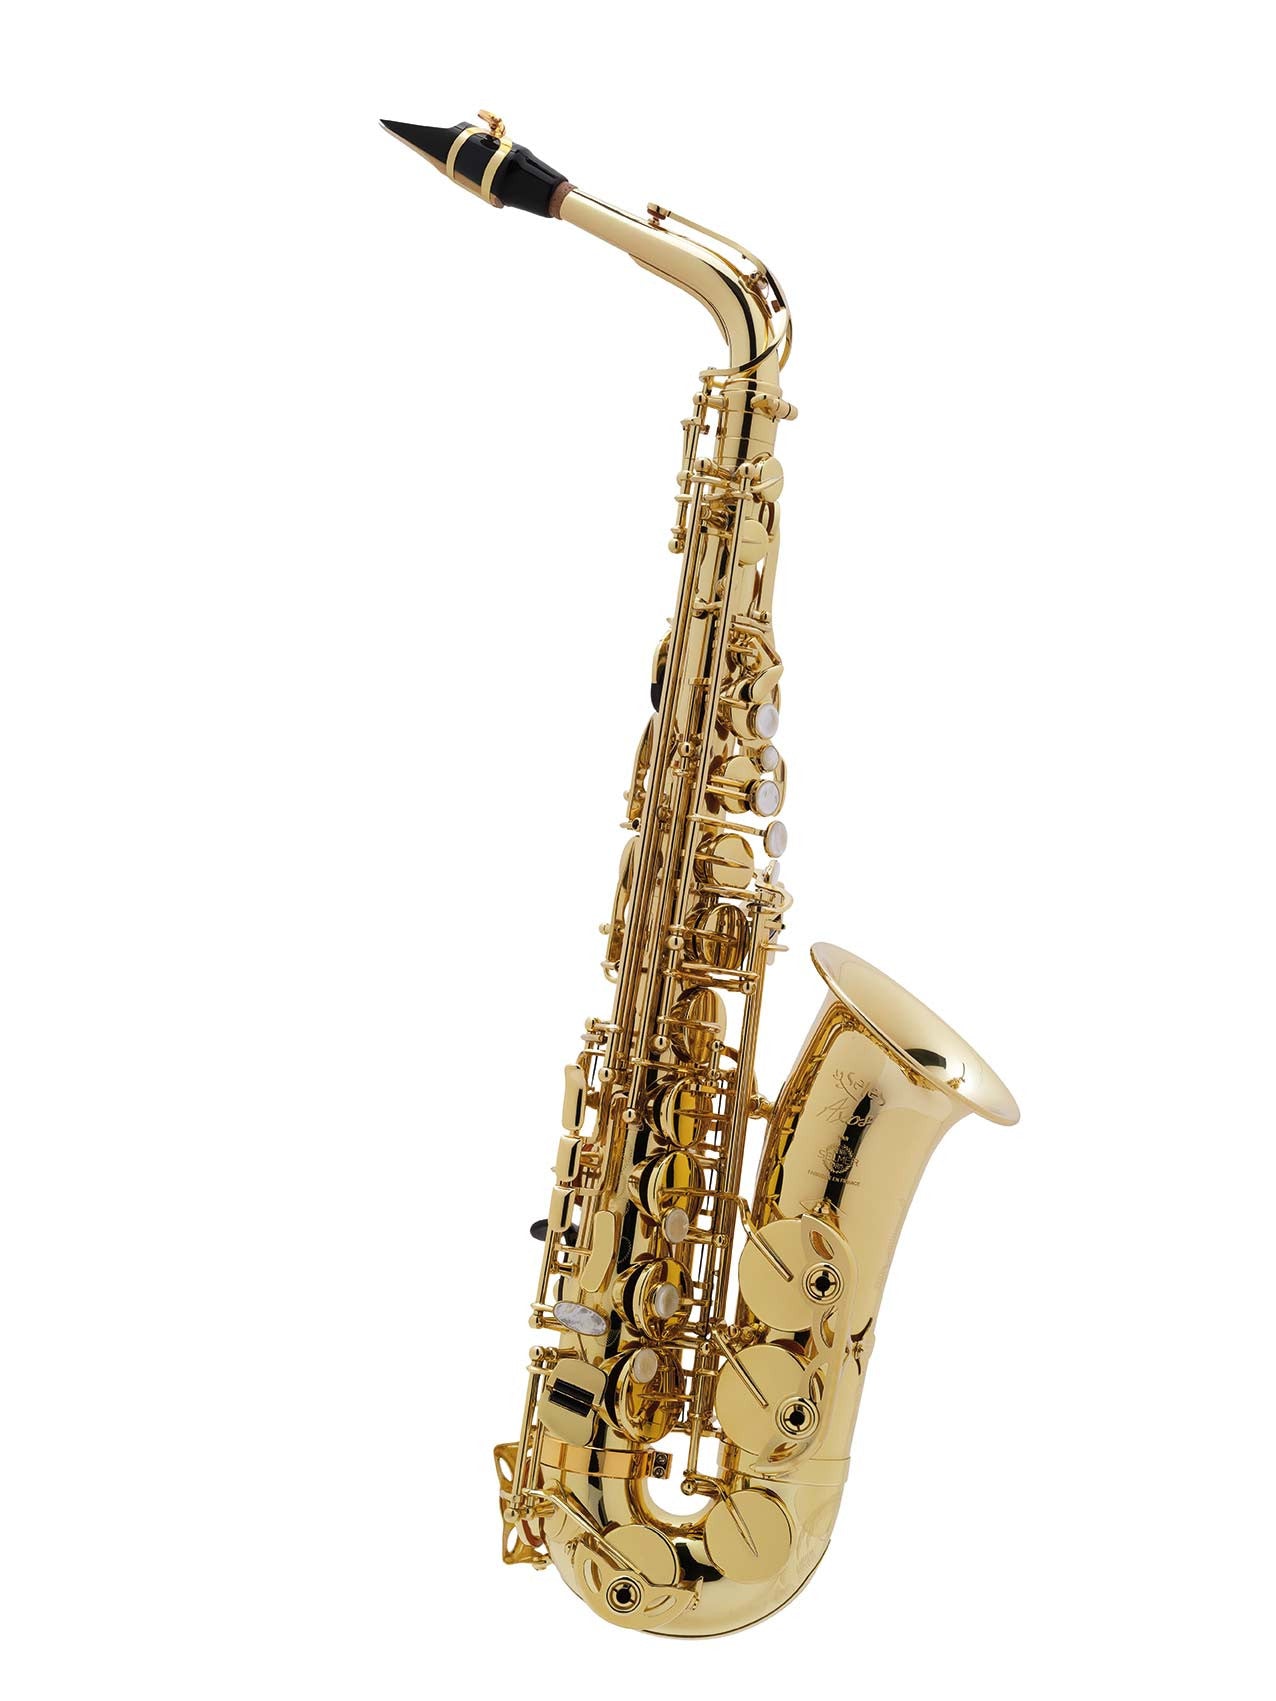 Selmer Paris 54AXOS Professional Model "Axos" Alto Saxophone